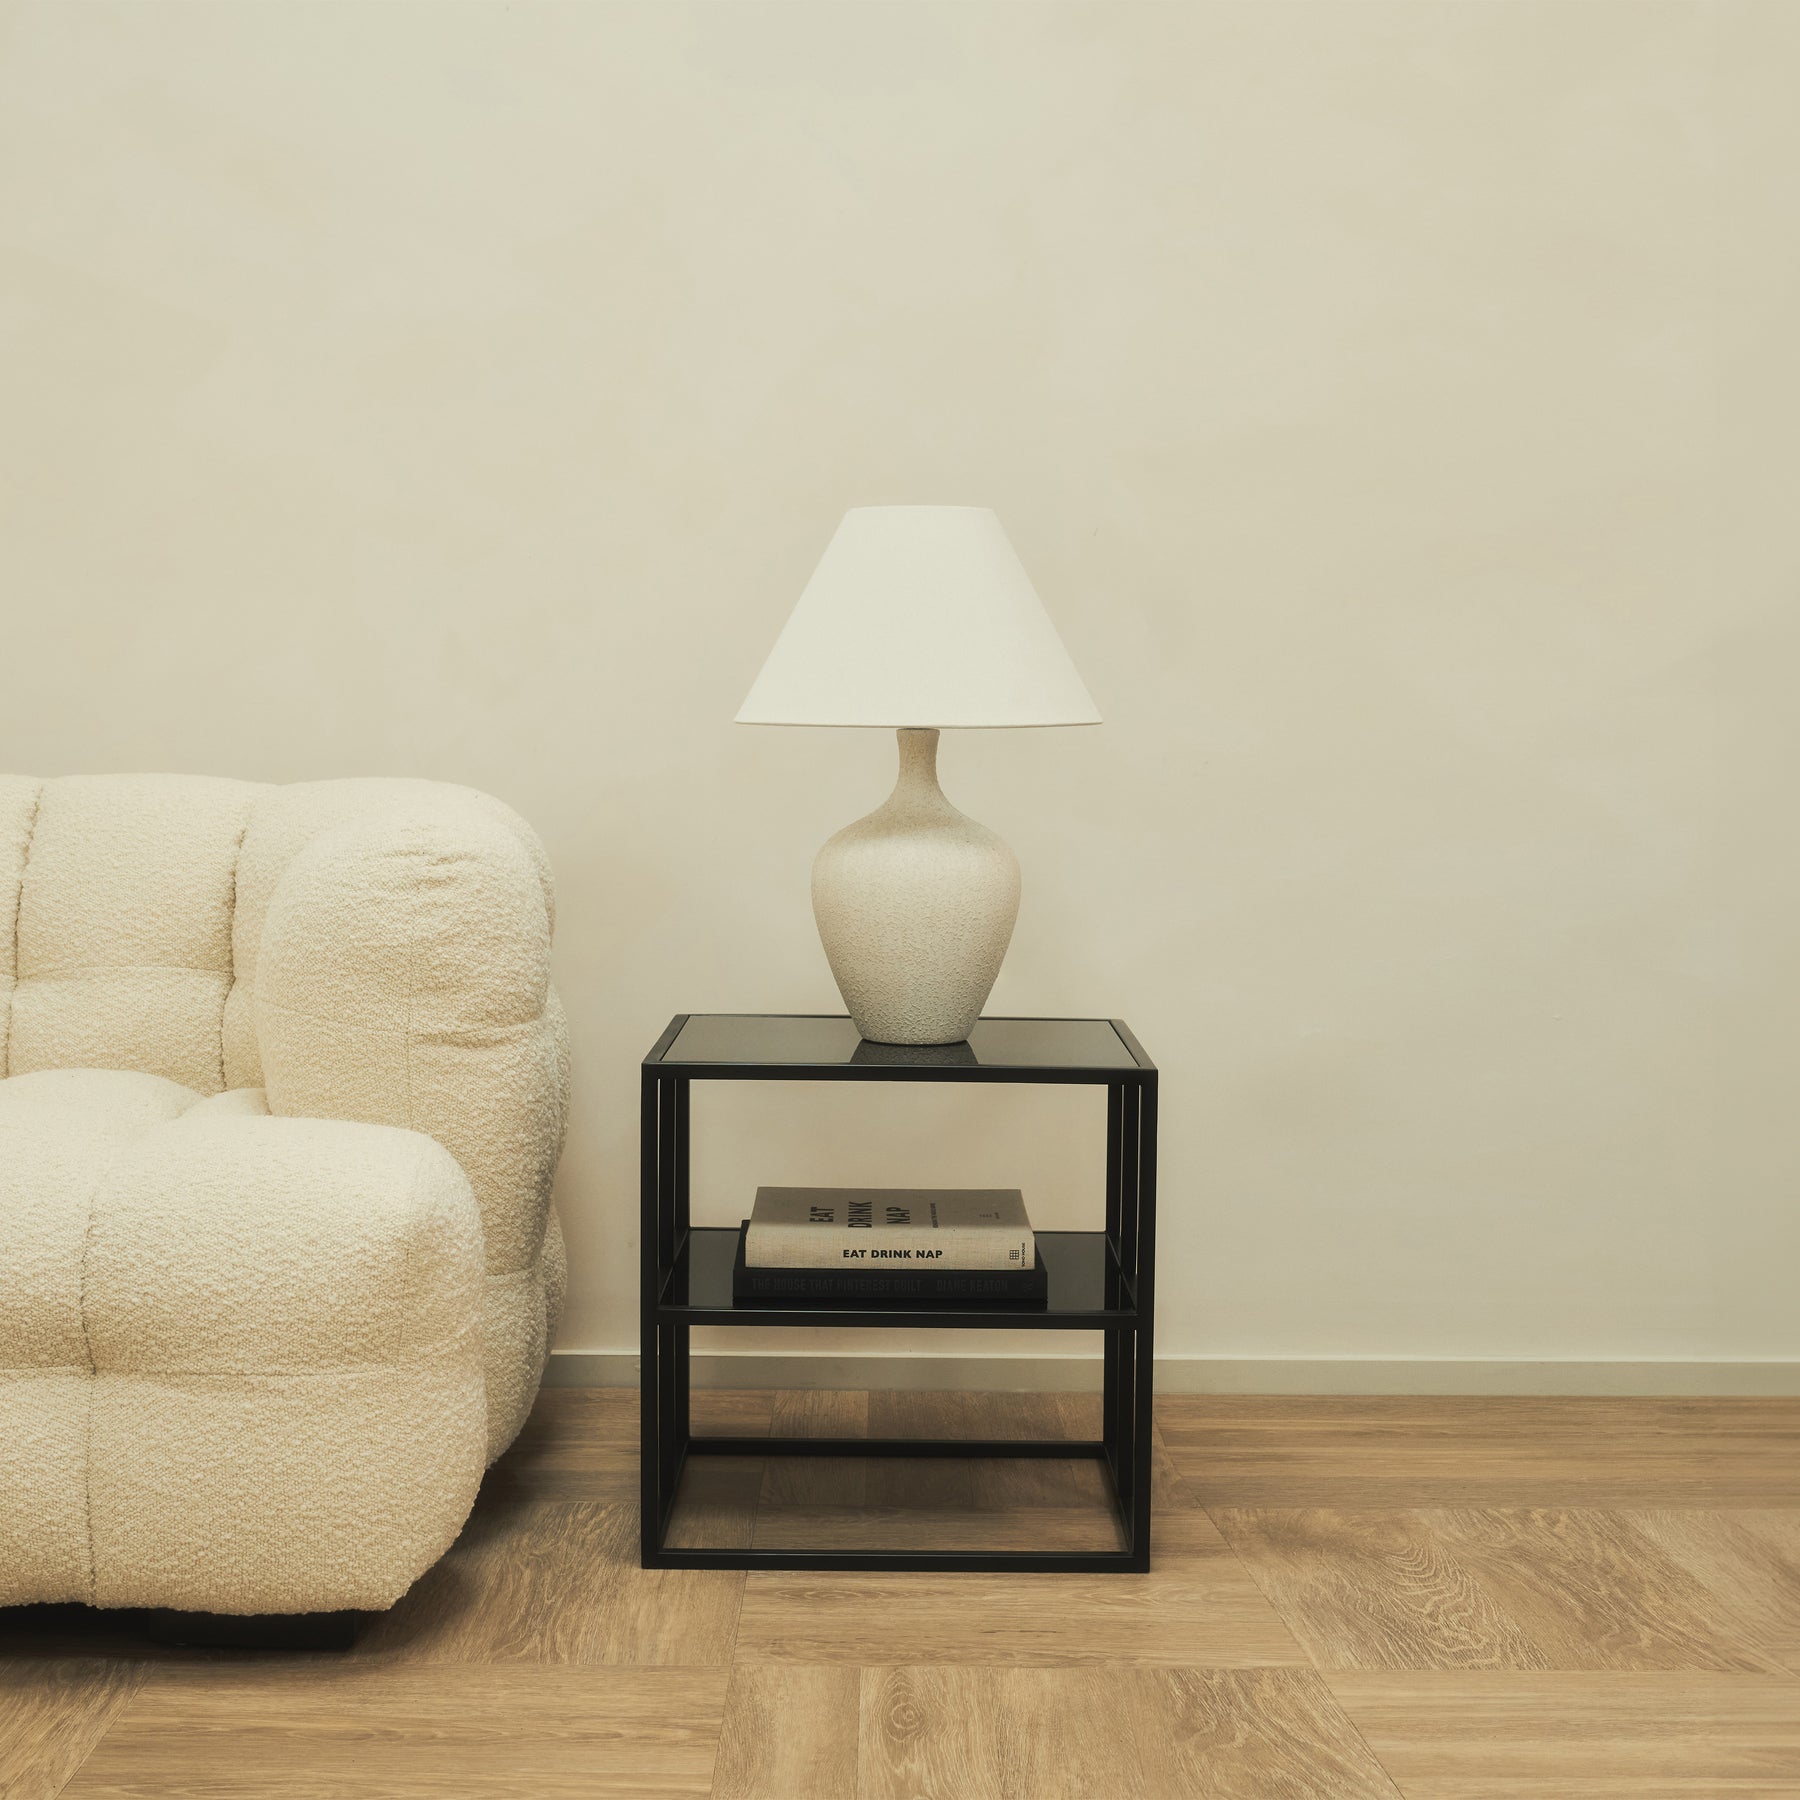 Textured Ceramic Based Table Lamp Natural Shade beside sofa